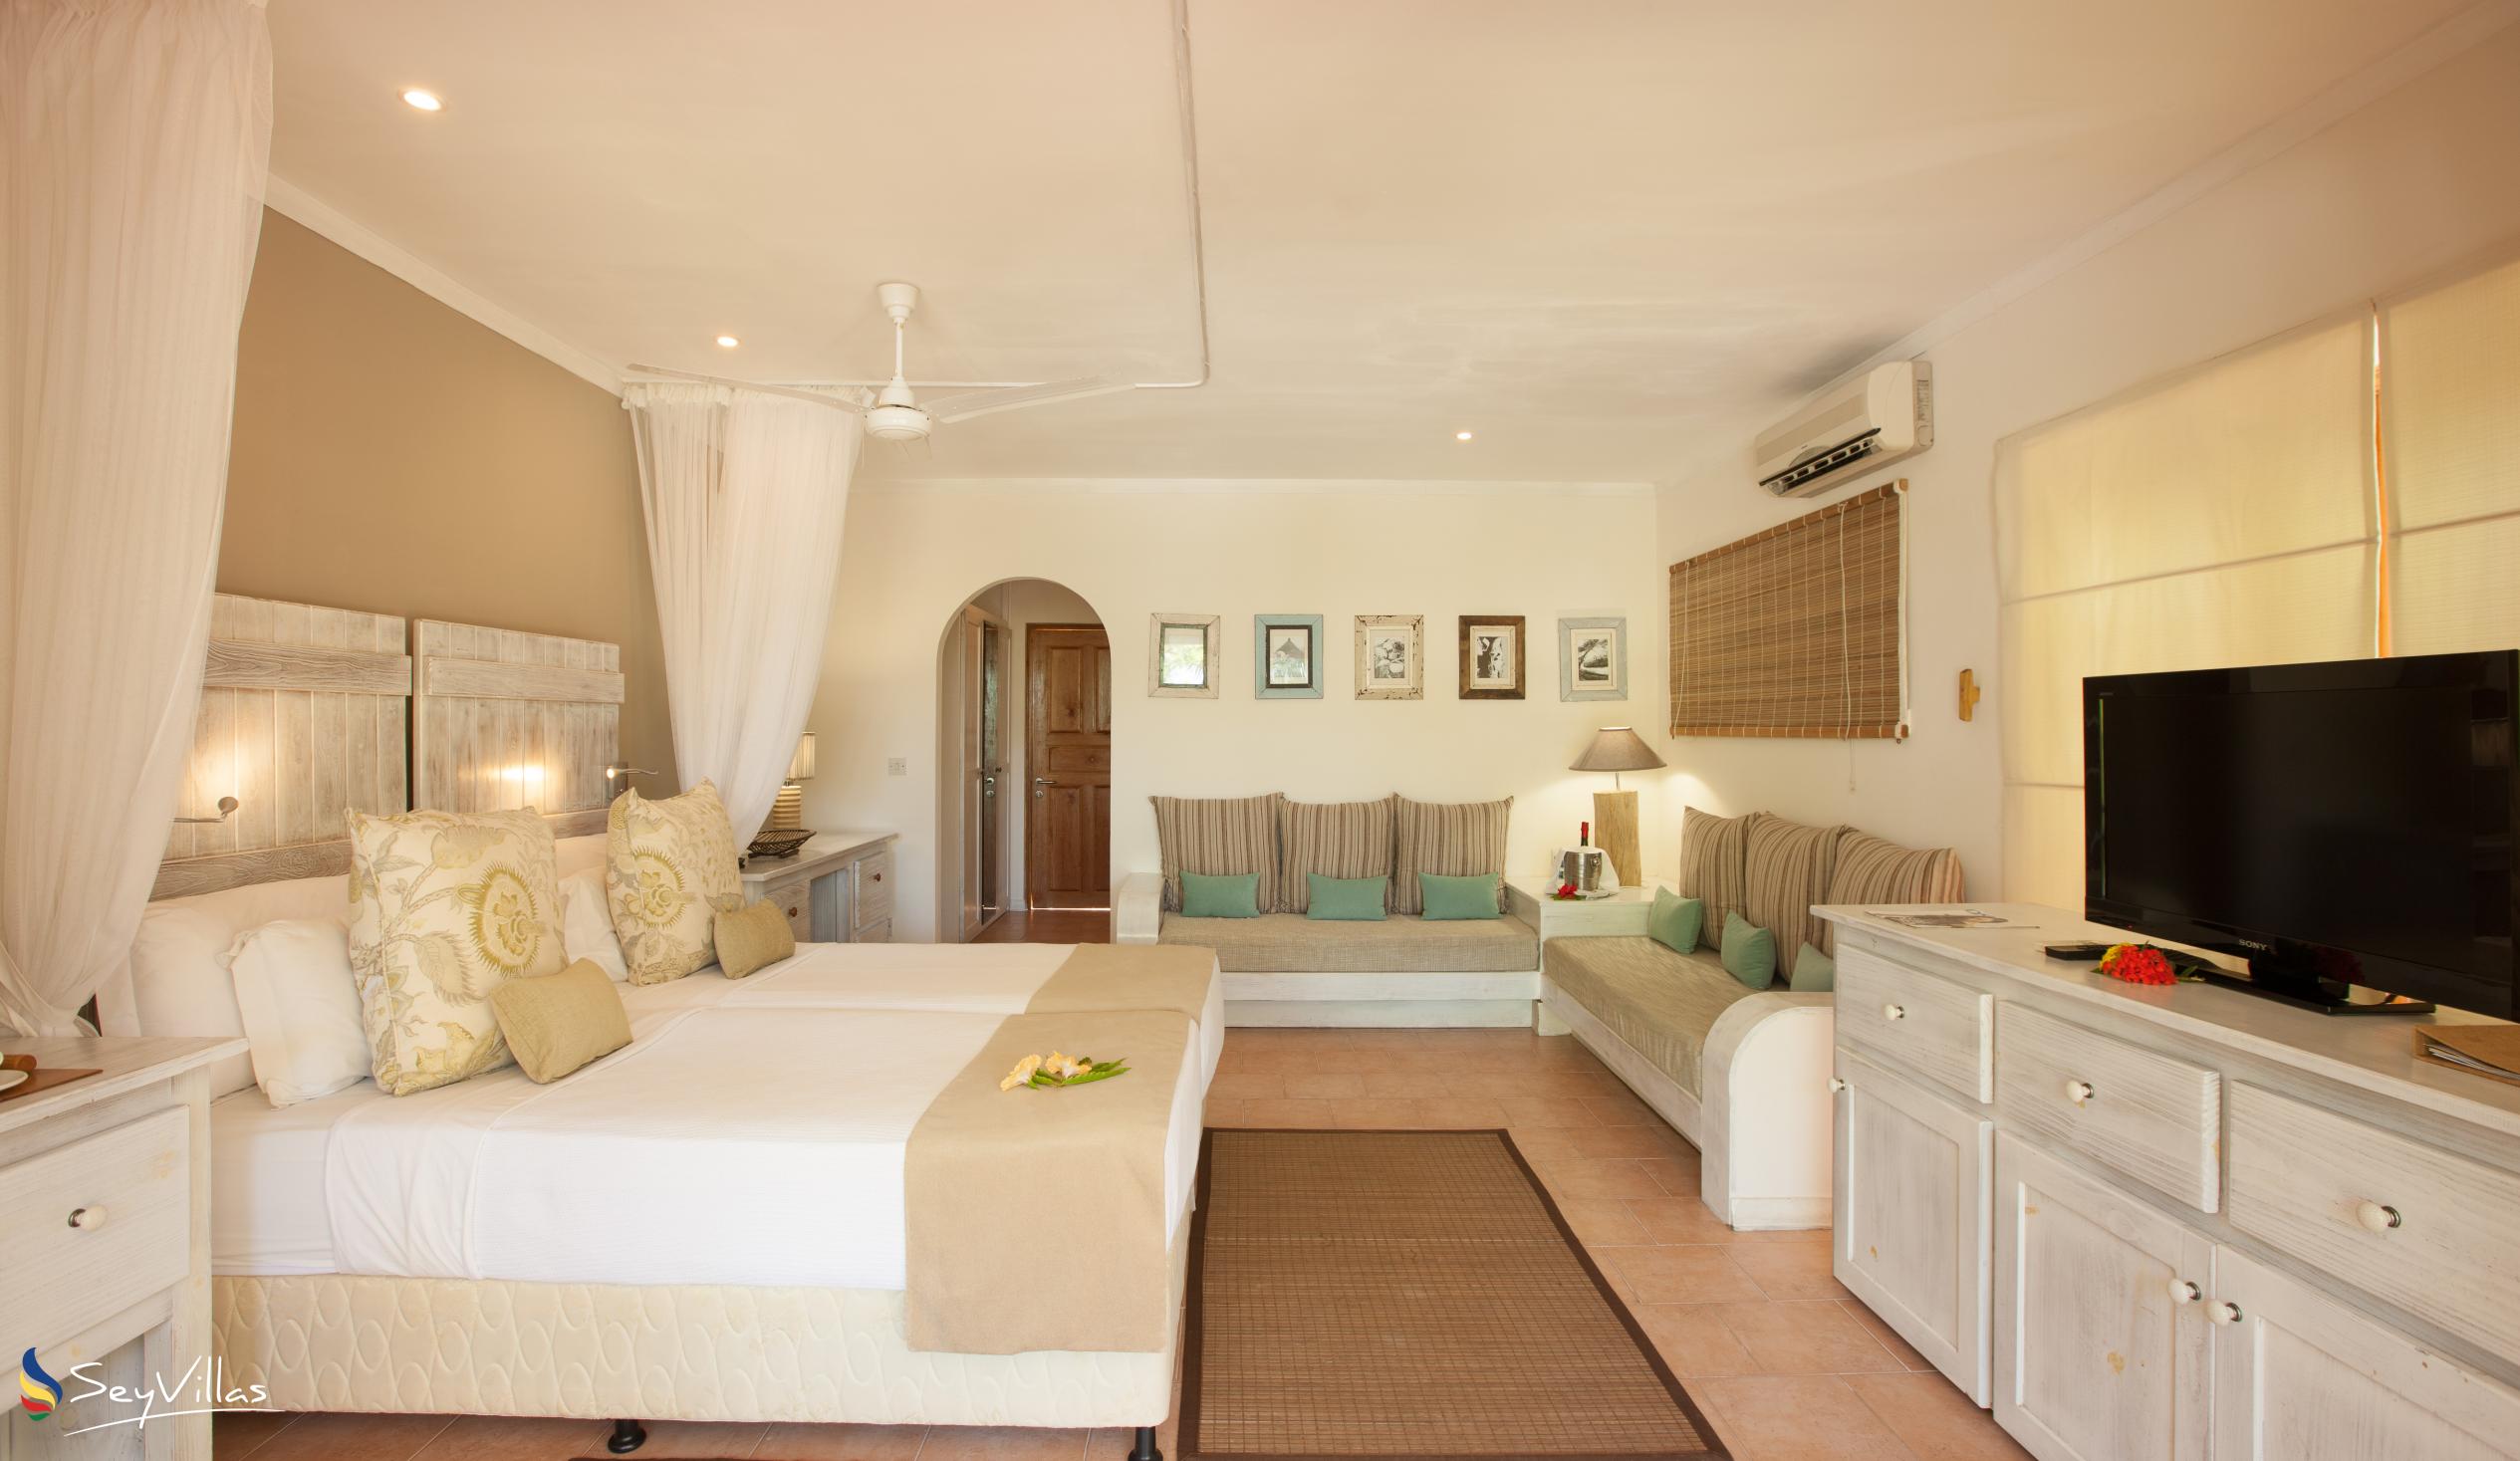 Photo 68: Indian Ocean Lodge - Double Room - Praslin (Seychelles)